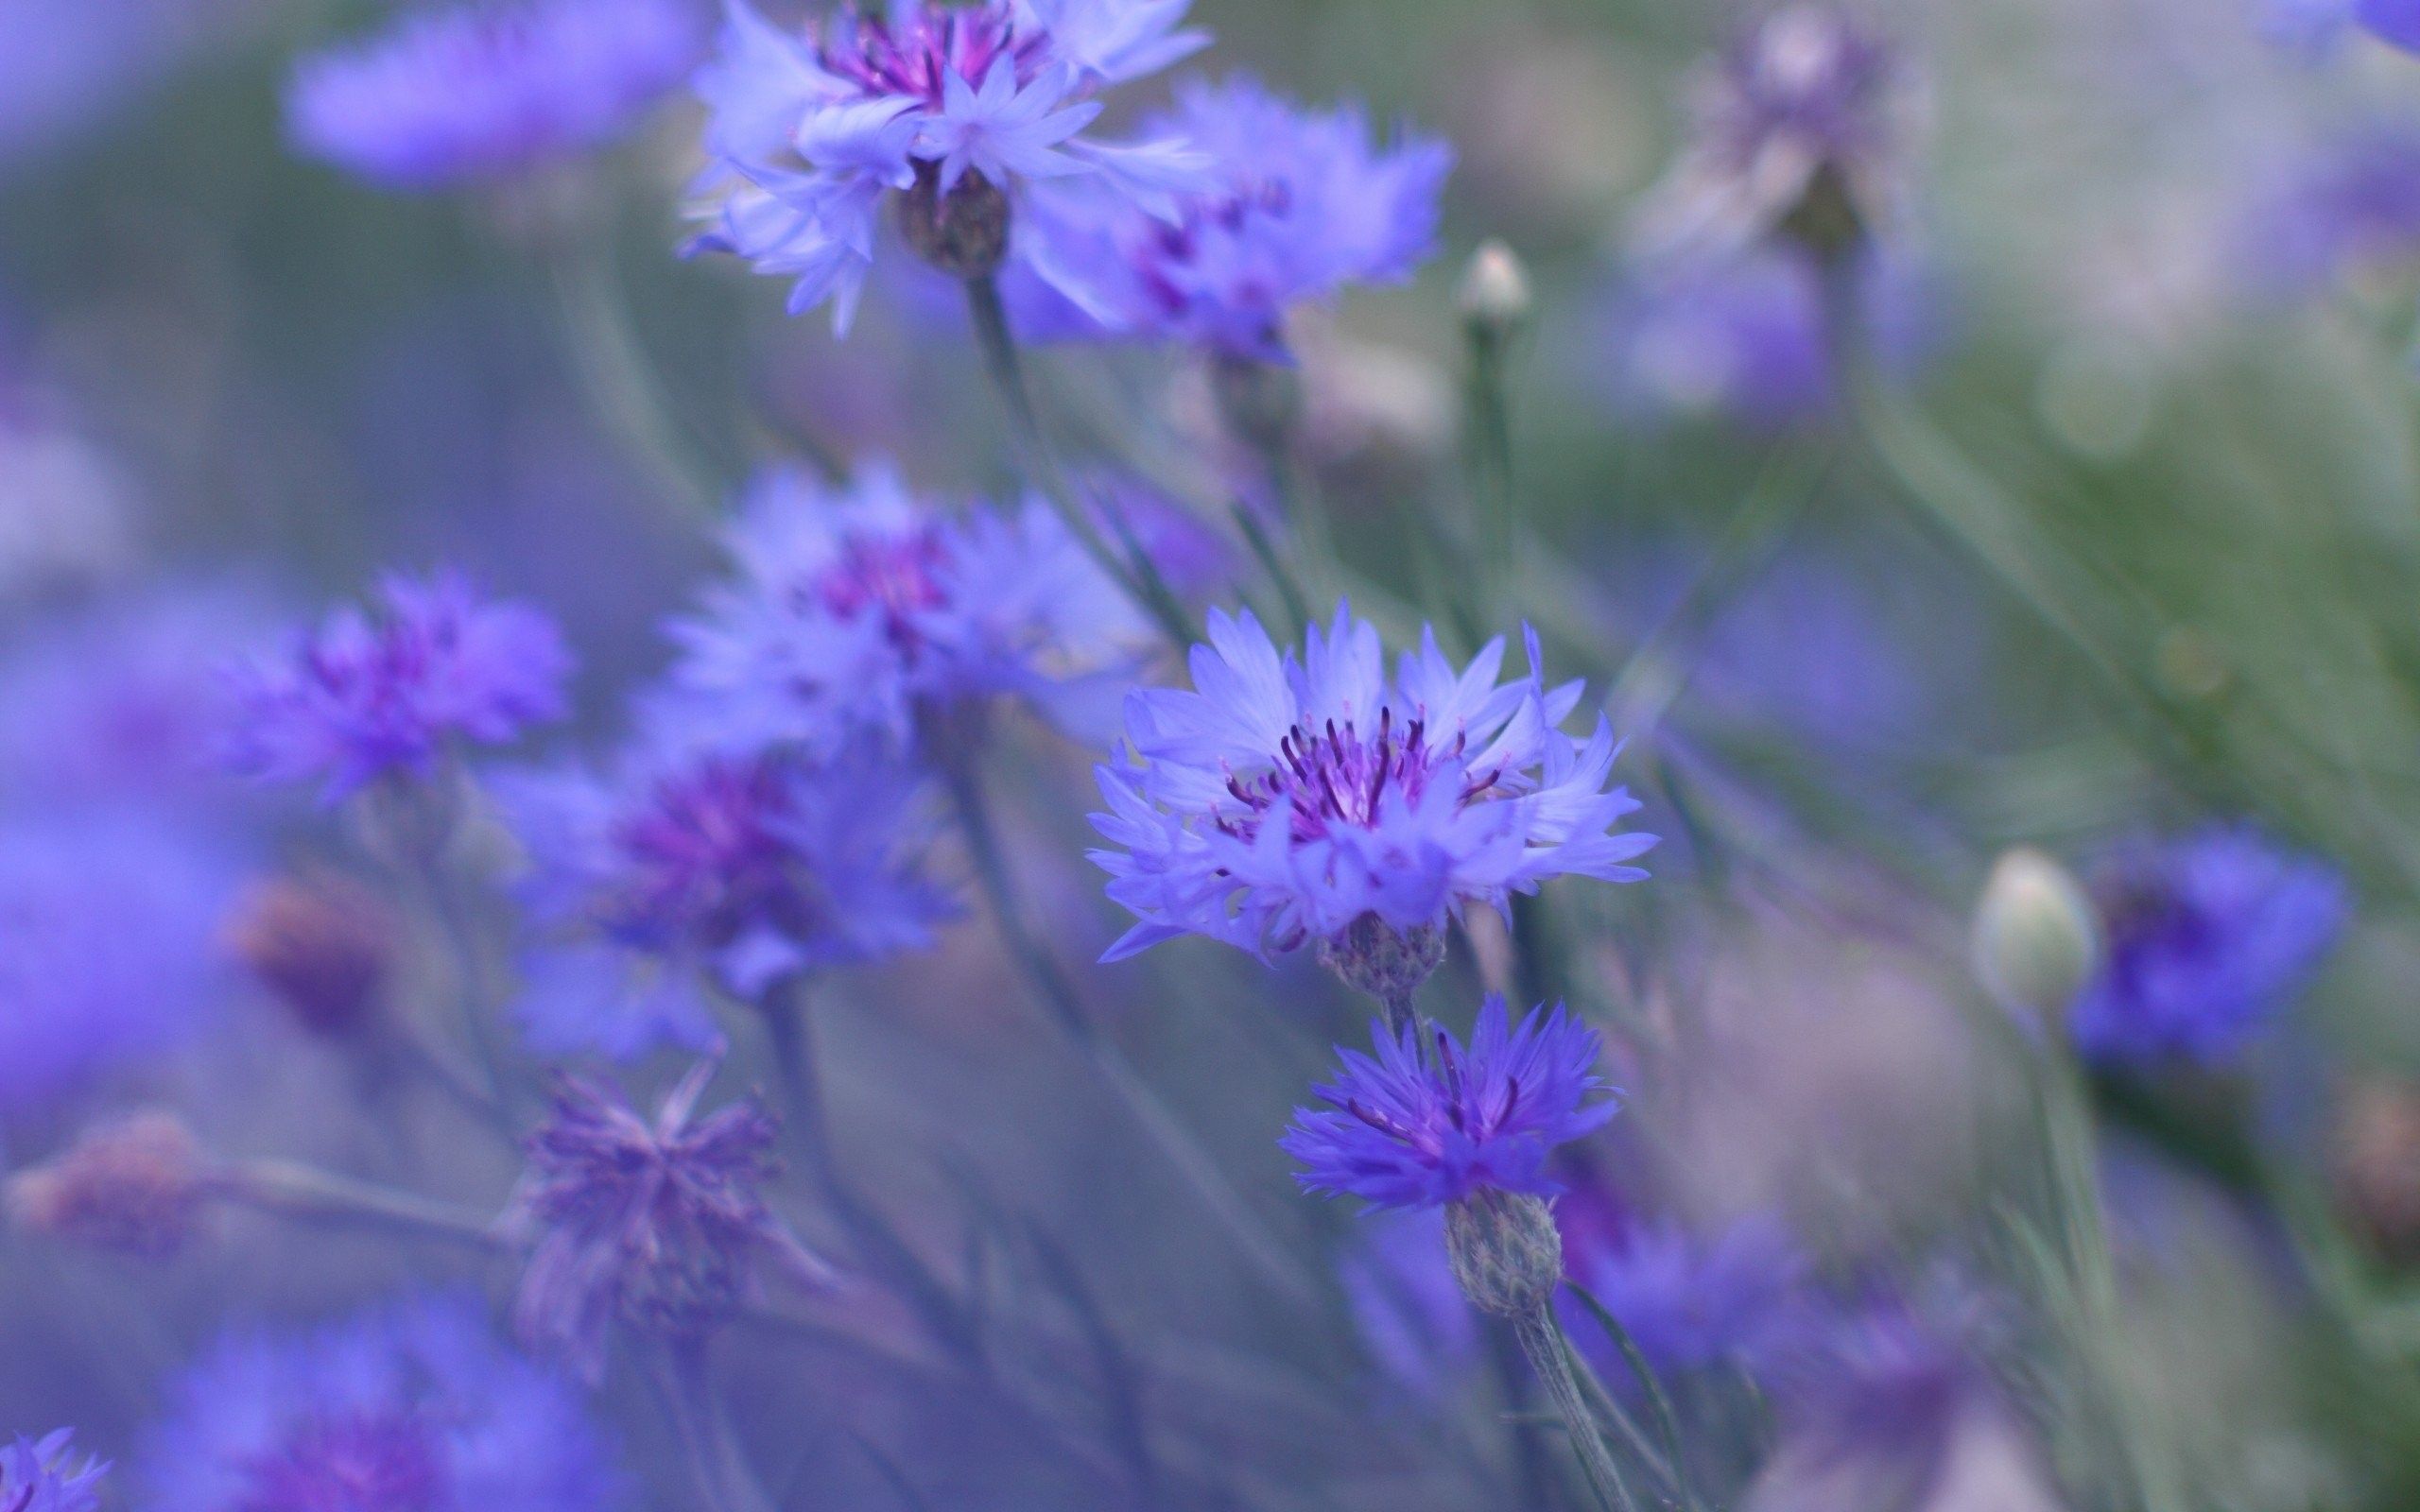 High Quality, Gentle, Flower Wallpaper Tumblr, Mobile Wallpaper, Nature, flowers, free, Desktop Background Blue, Natural, 2560x1600